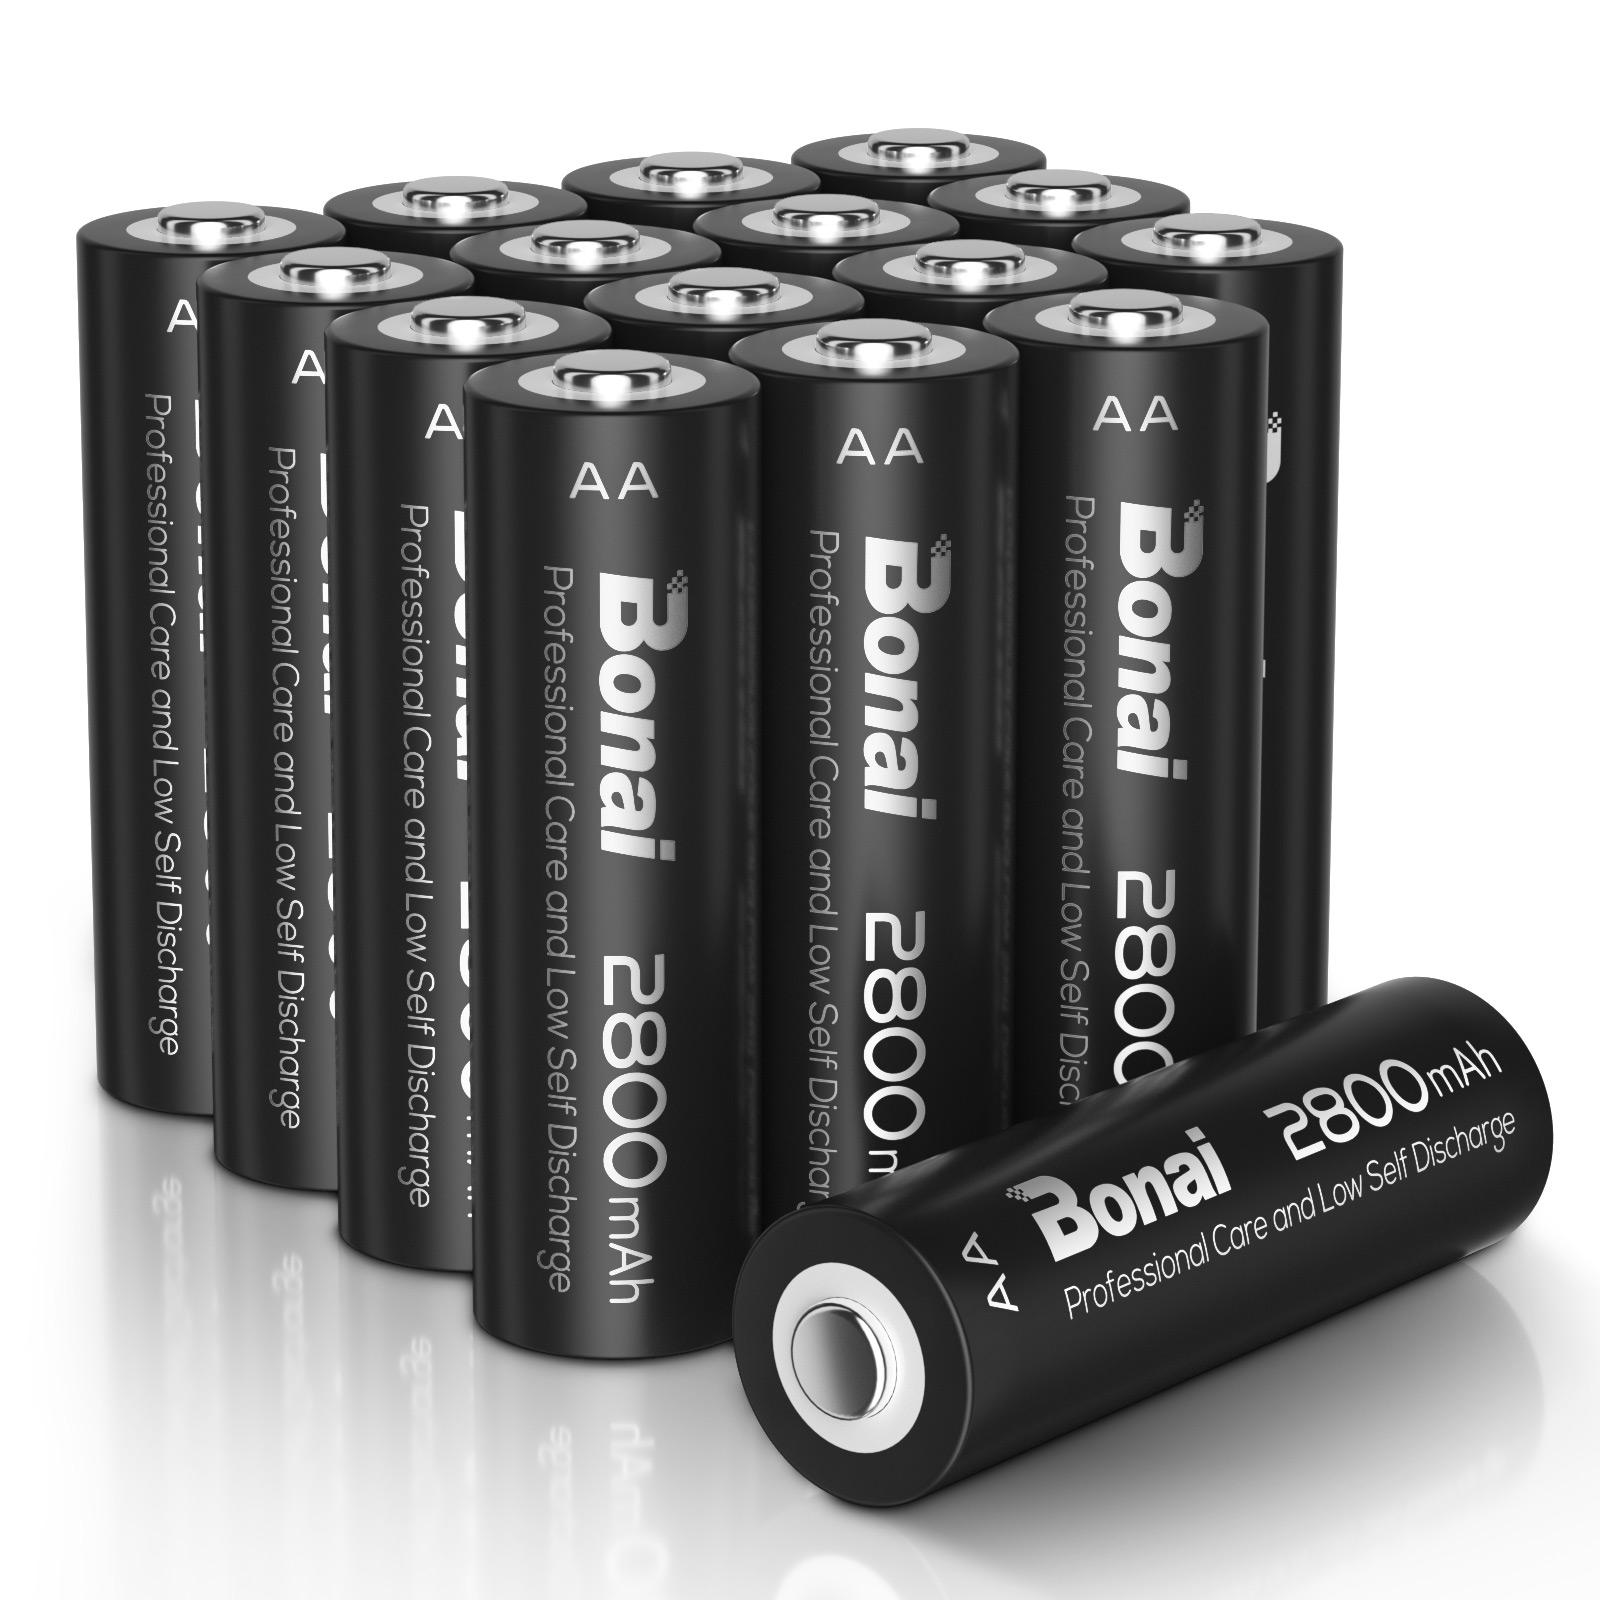 BONAI AA Rechargeable Batteries 2800mAh High Capacity 1.2V Ni-MH Low Self Discharge AA Battery-16 Count